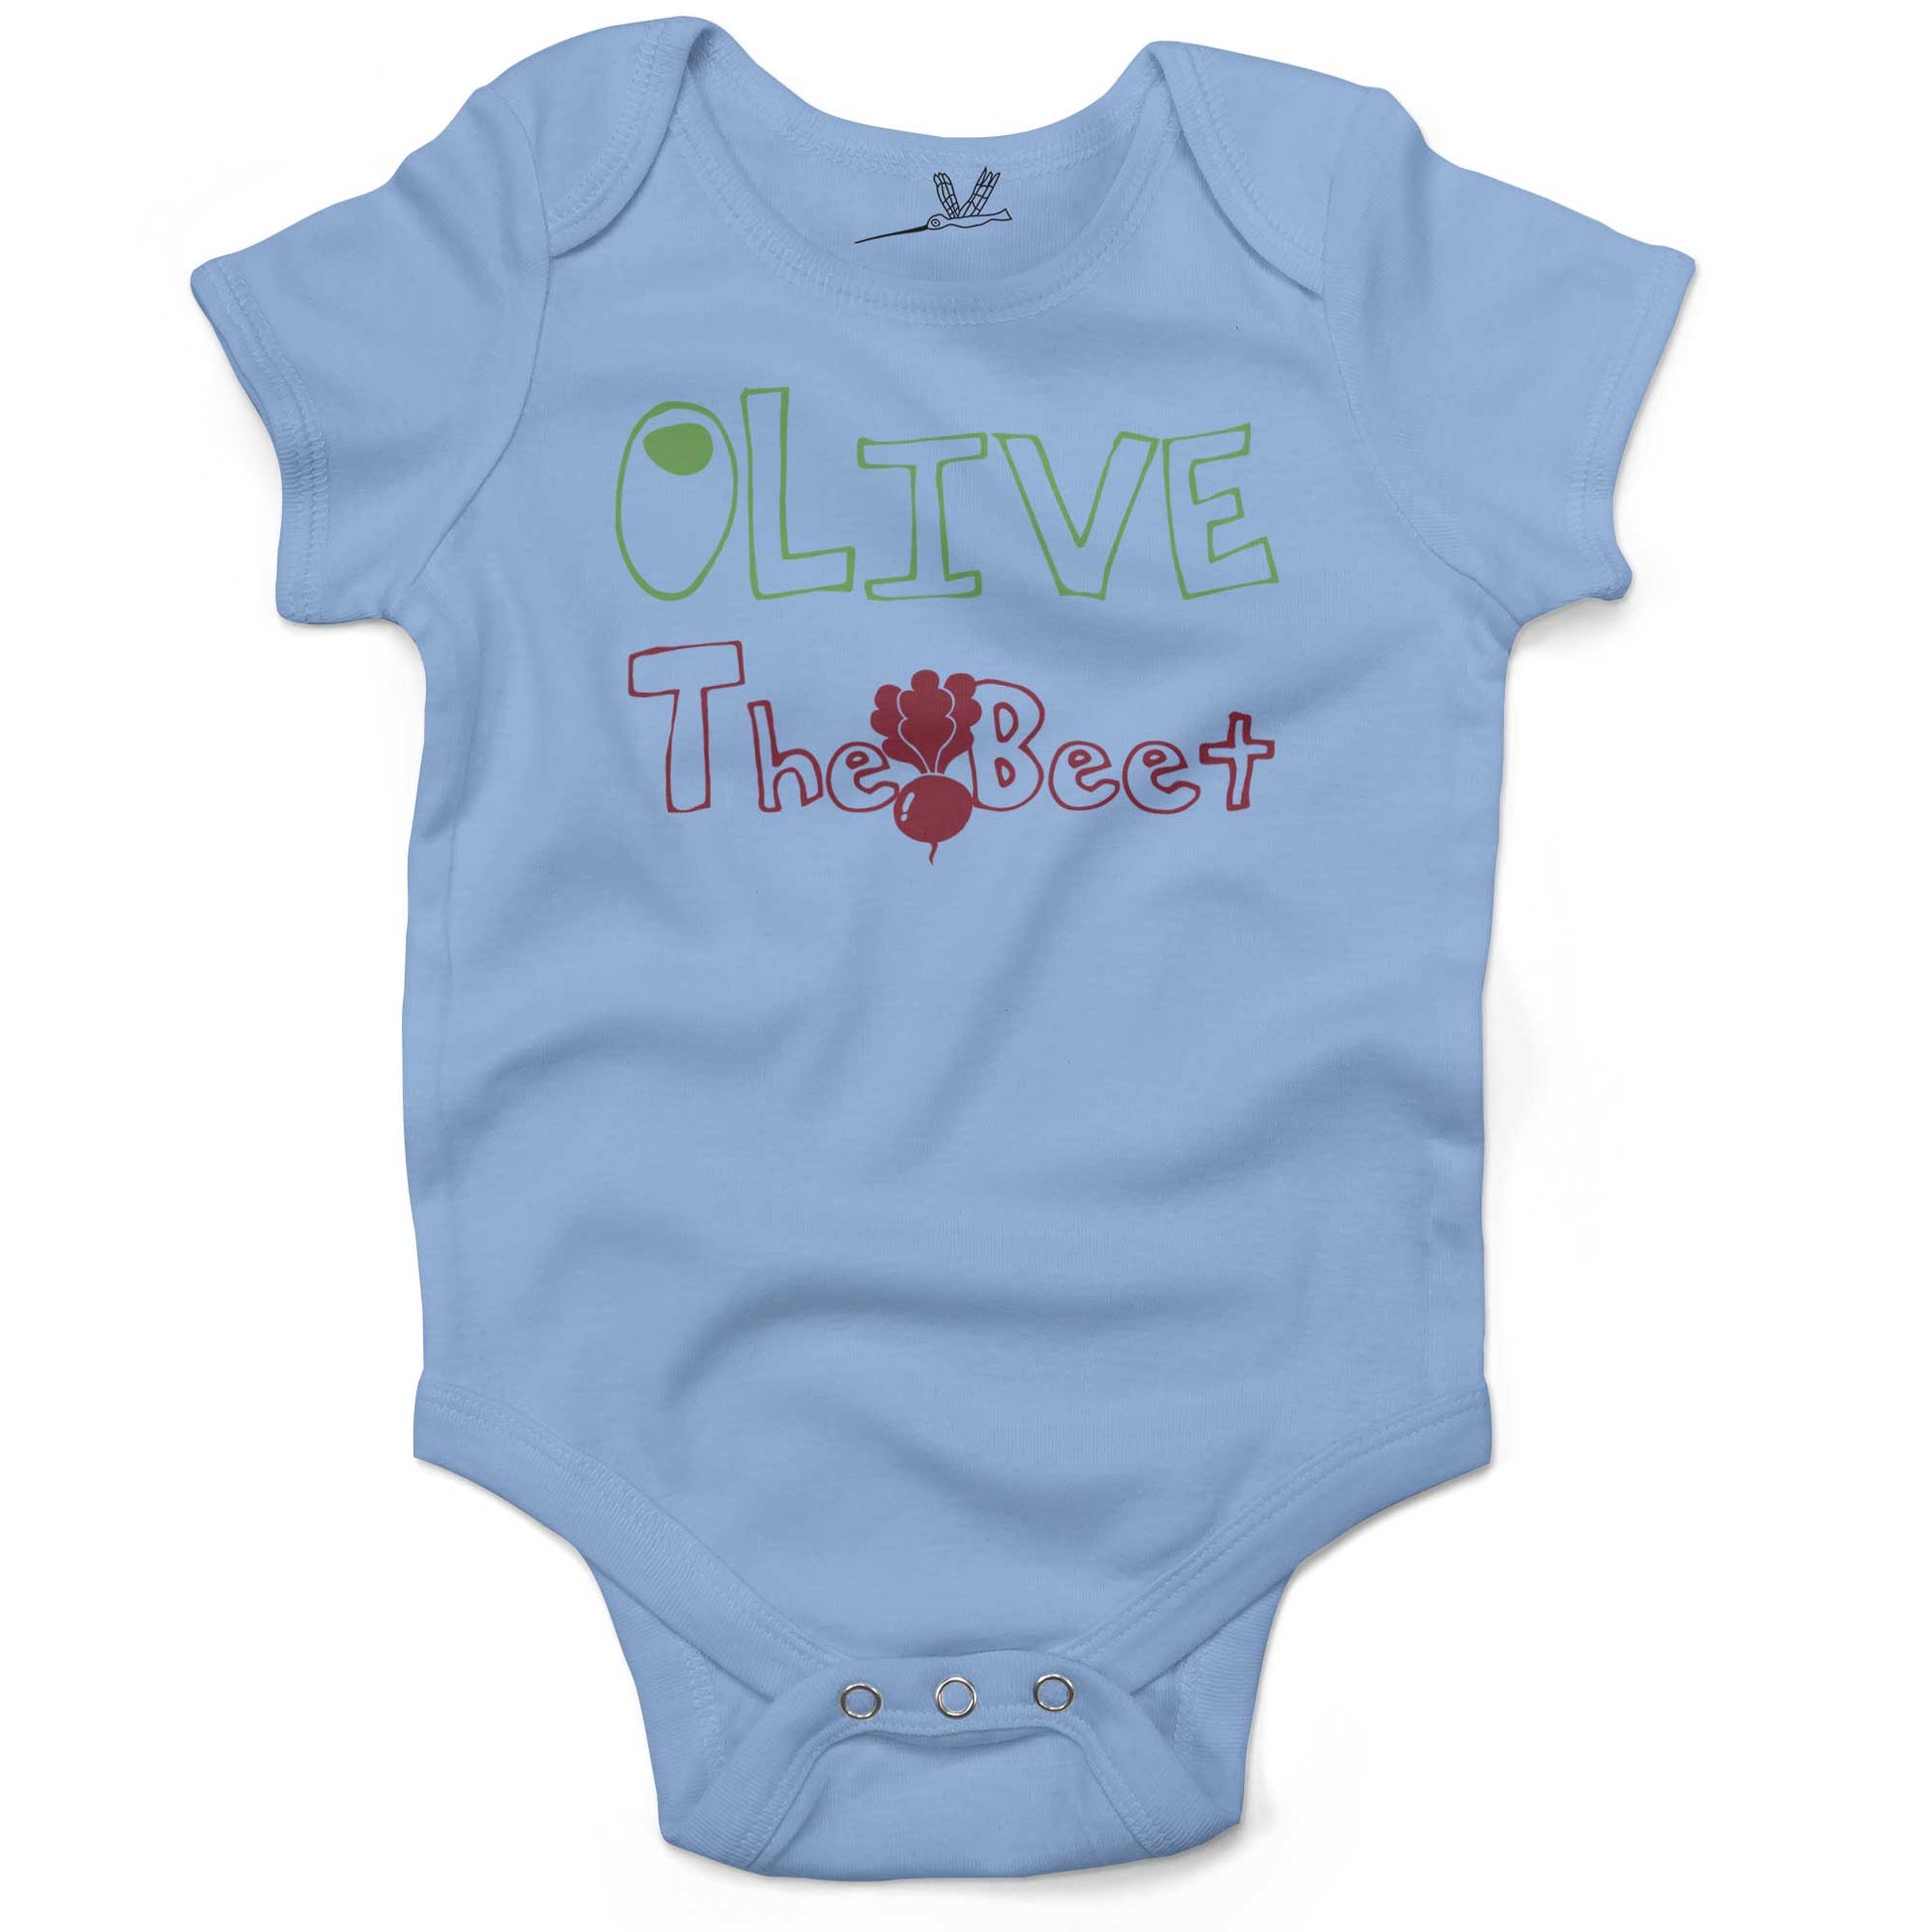 Olive The Beet Infant Bodysuit or Raglan Baby Tee-Organic Baby Blue-3-6 months